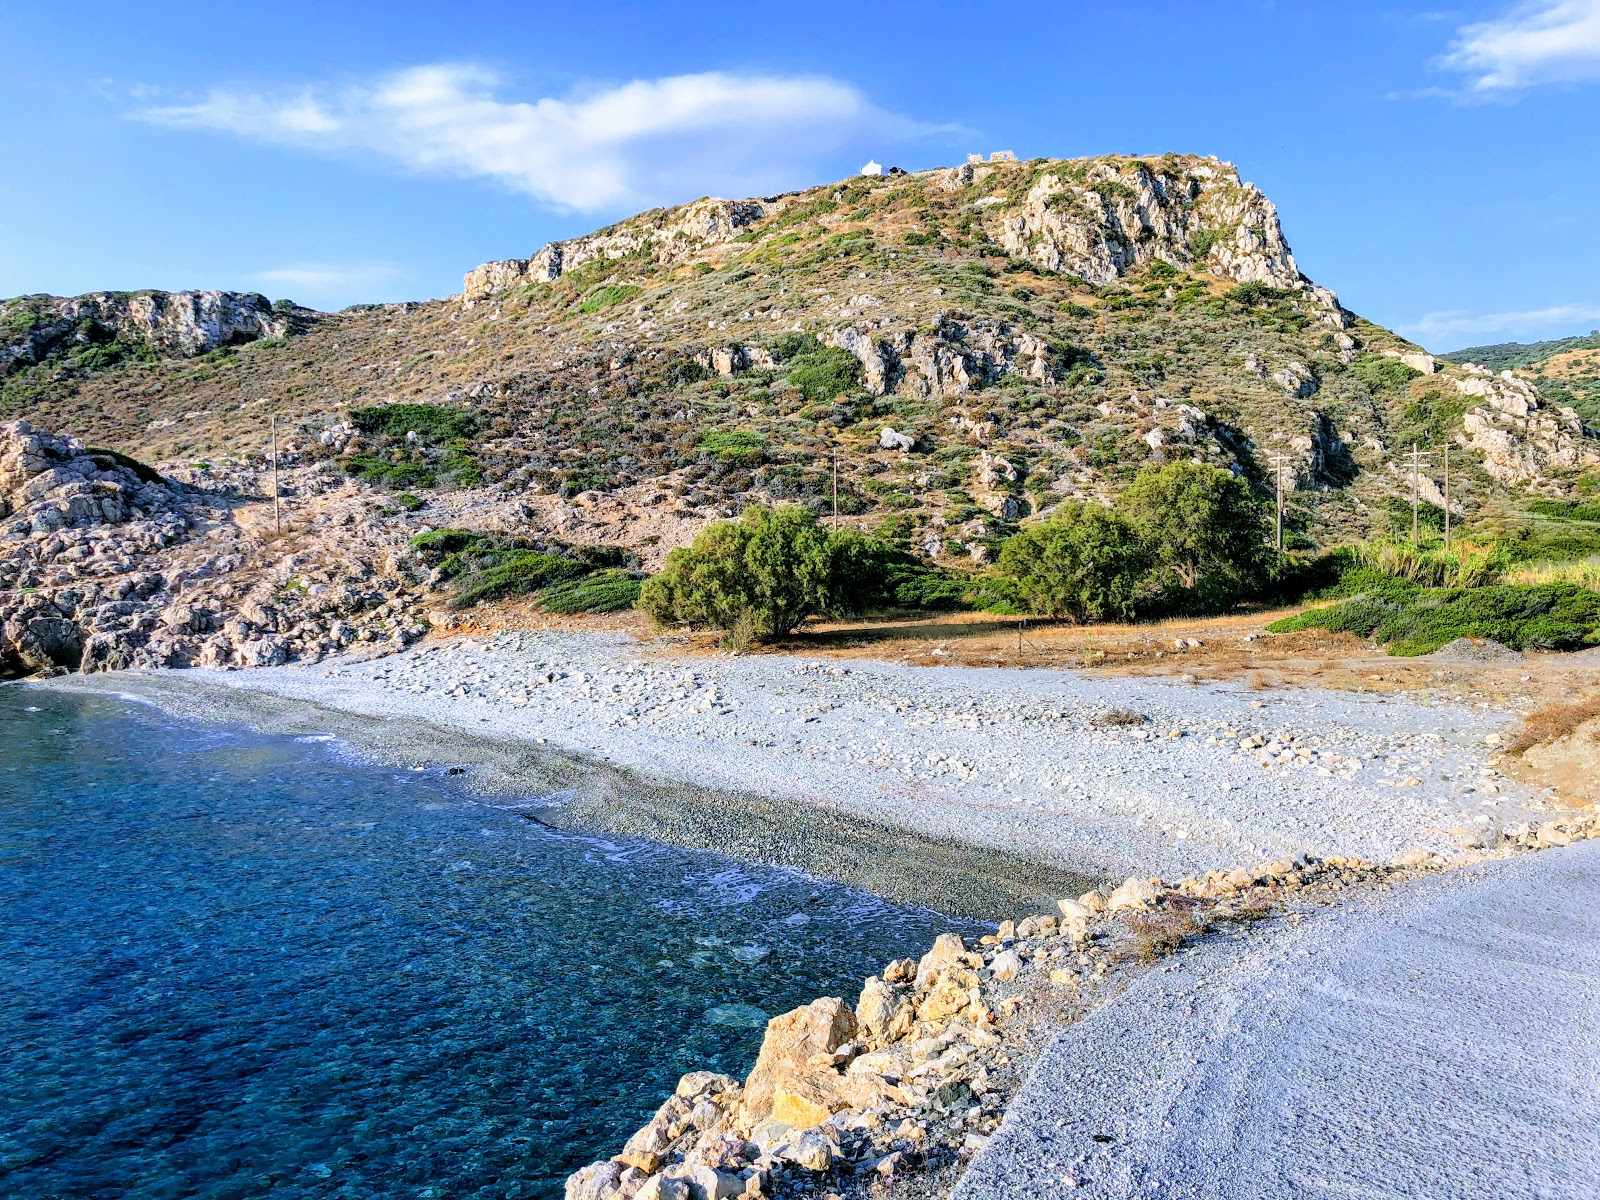 Fotografija Agios Pelagia beach III z sivi kamenček površino